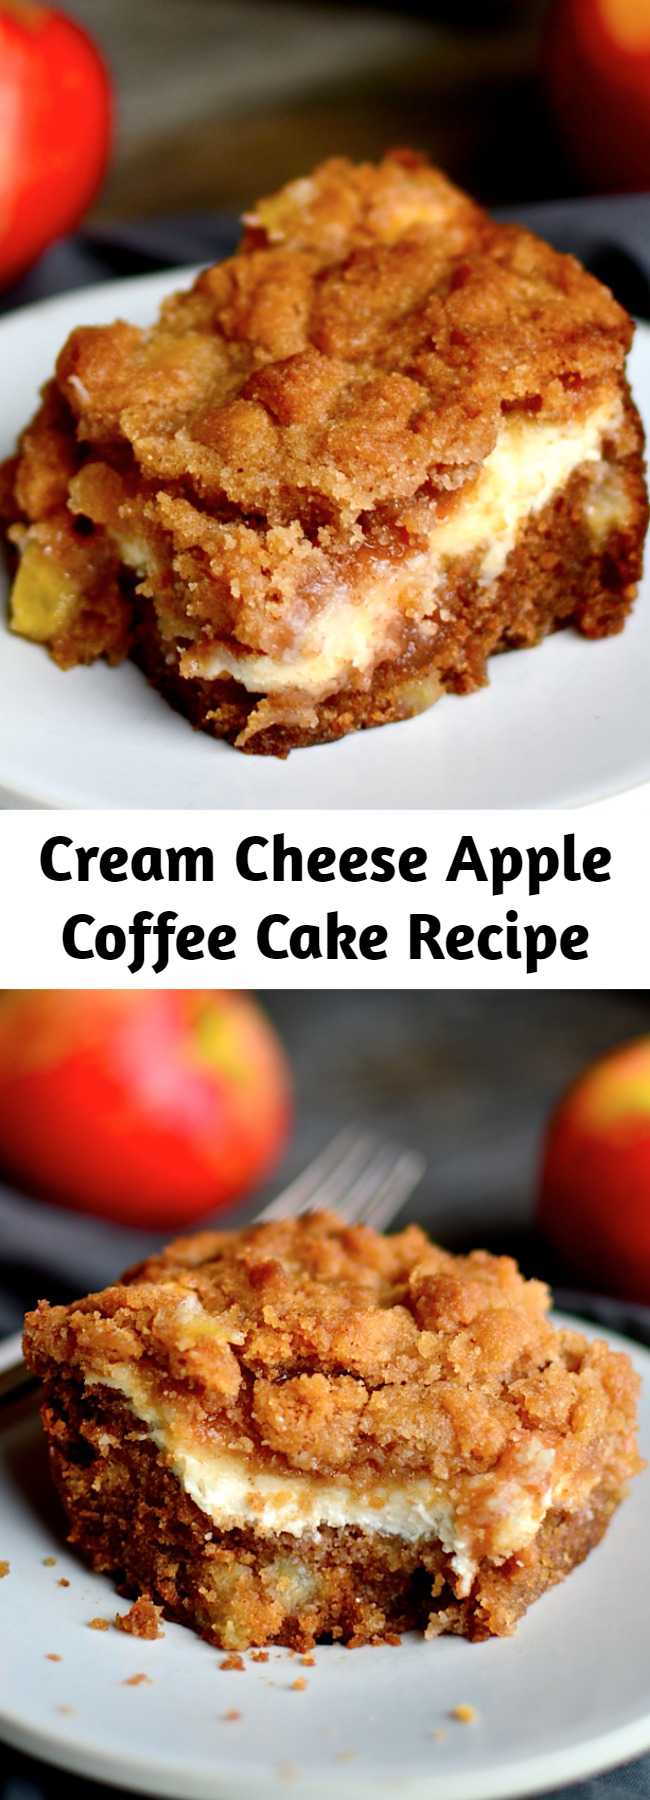 Cream Cheese Apple Coffee Cake Recipe - What a beautiful dessert. I love using the apples of the season.